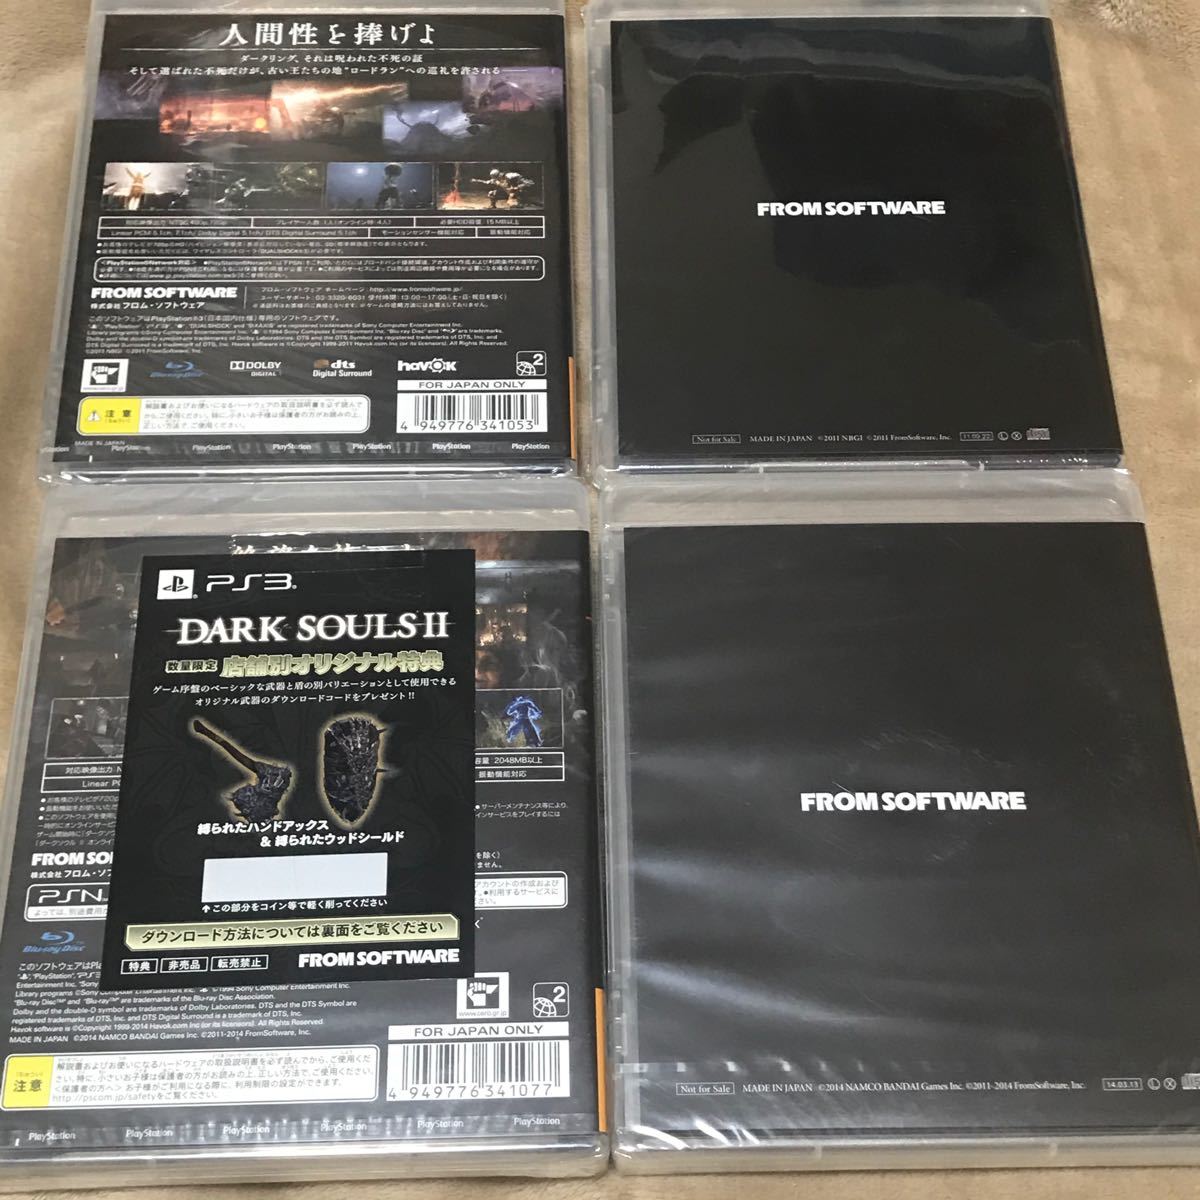 DARK SOULS   DARK SOULS 2  特典「特製マップ&オリジナルサウンドトラック」付き - PS3 ダークソウル